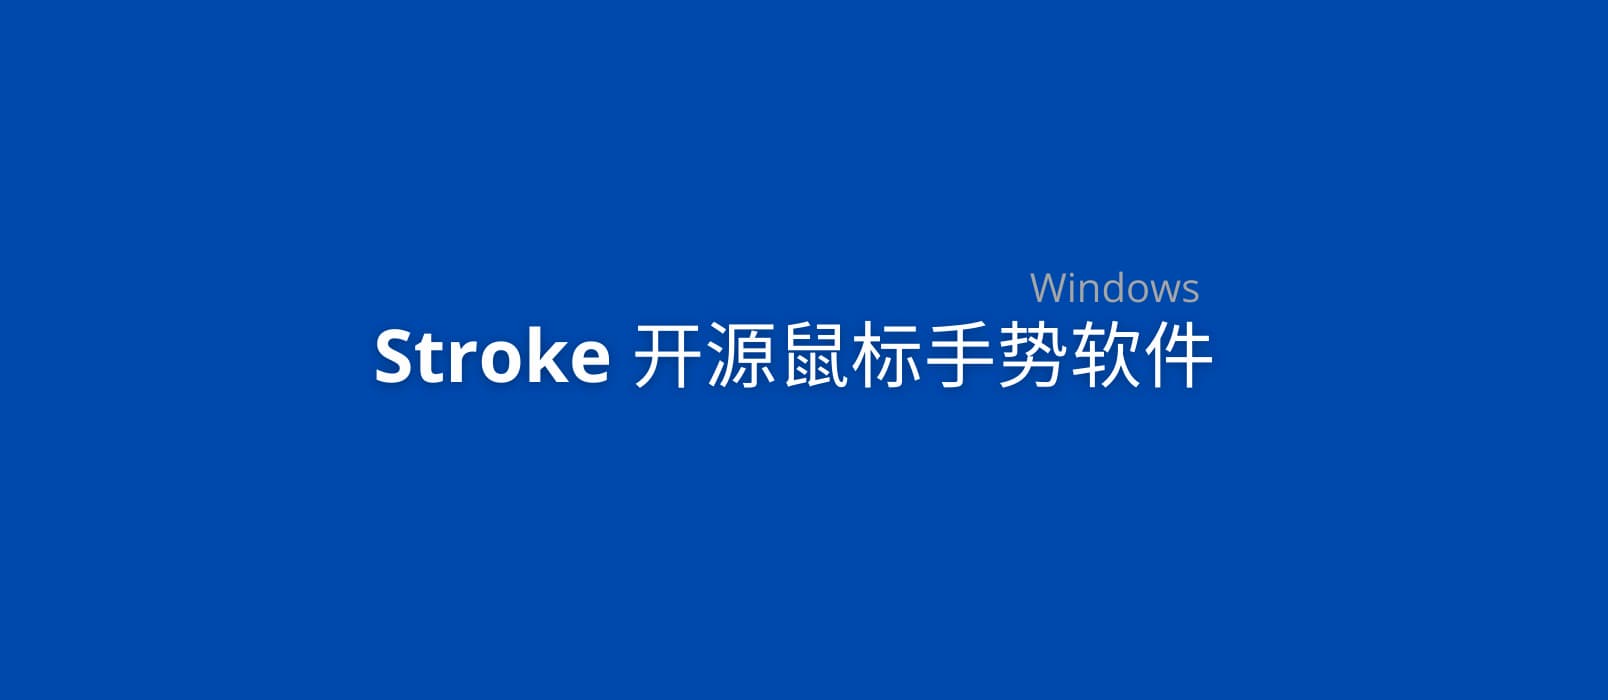 Stroke - 开源鼠标手势软件[Windows] 1